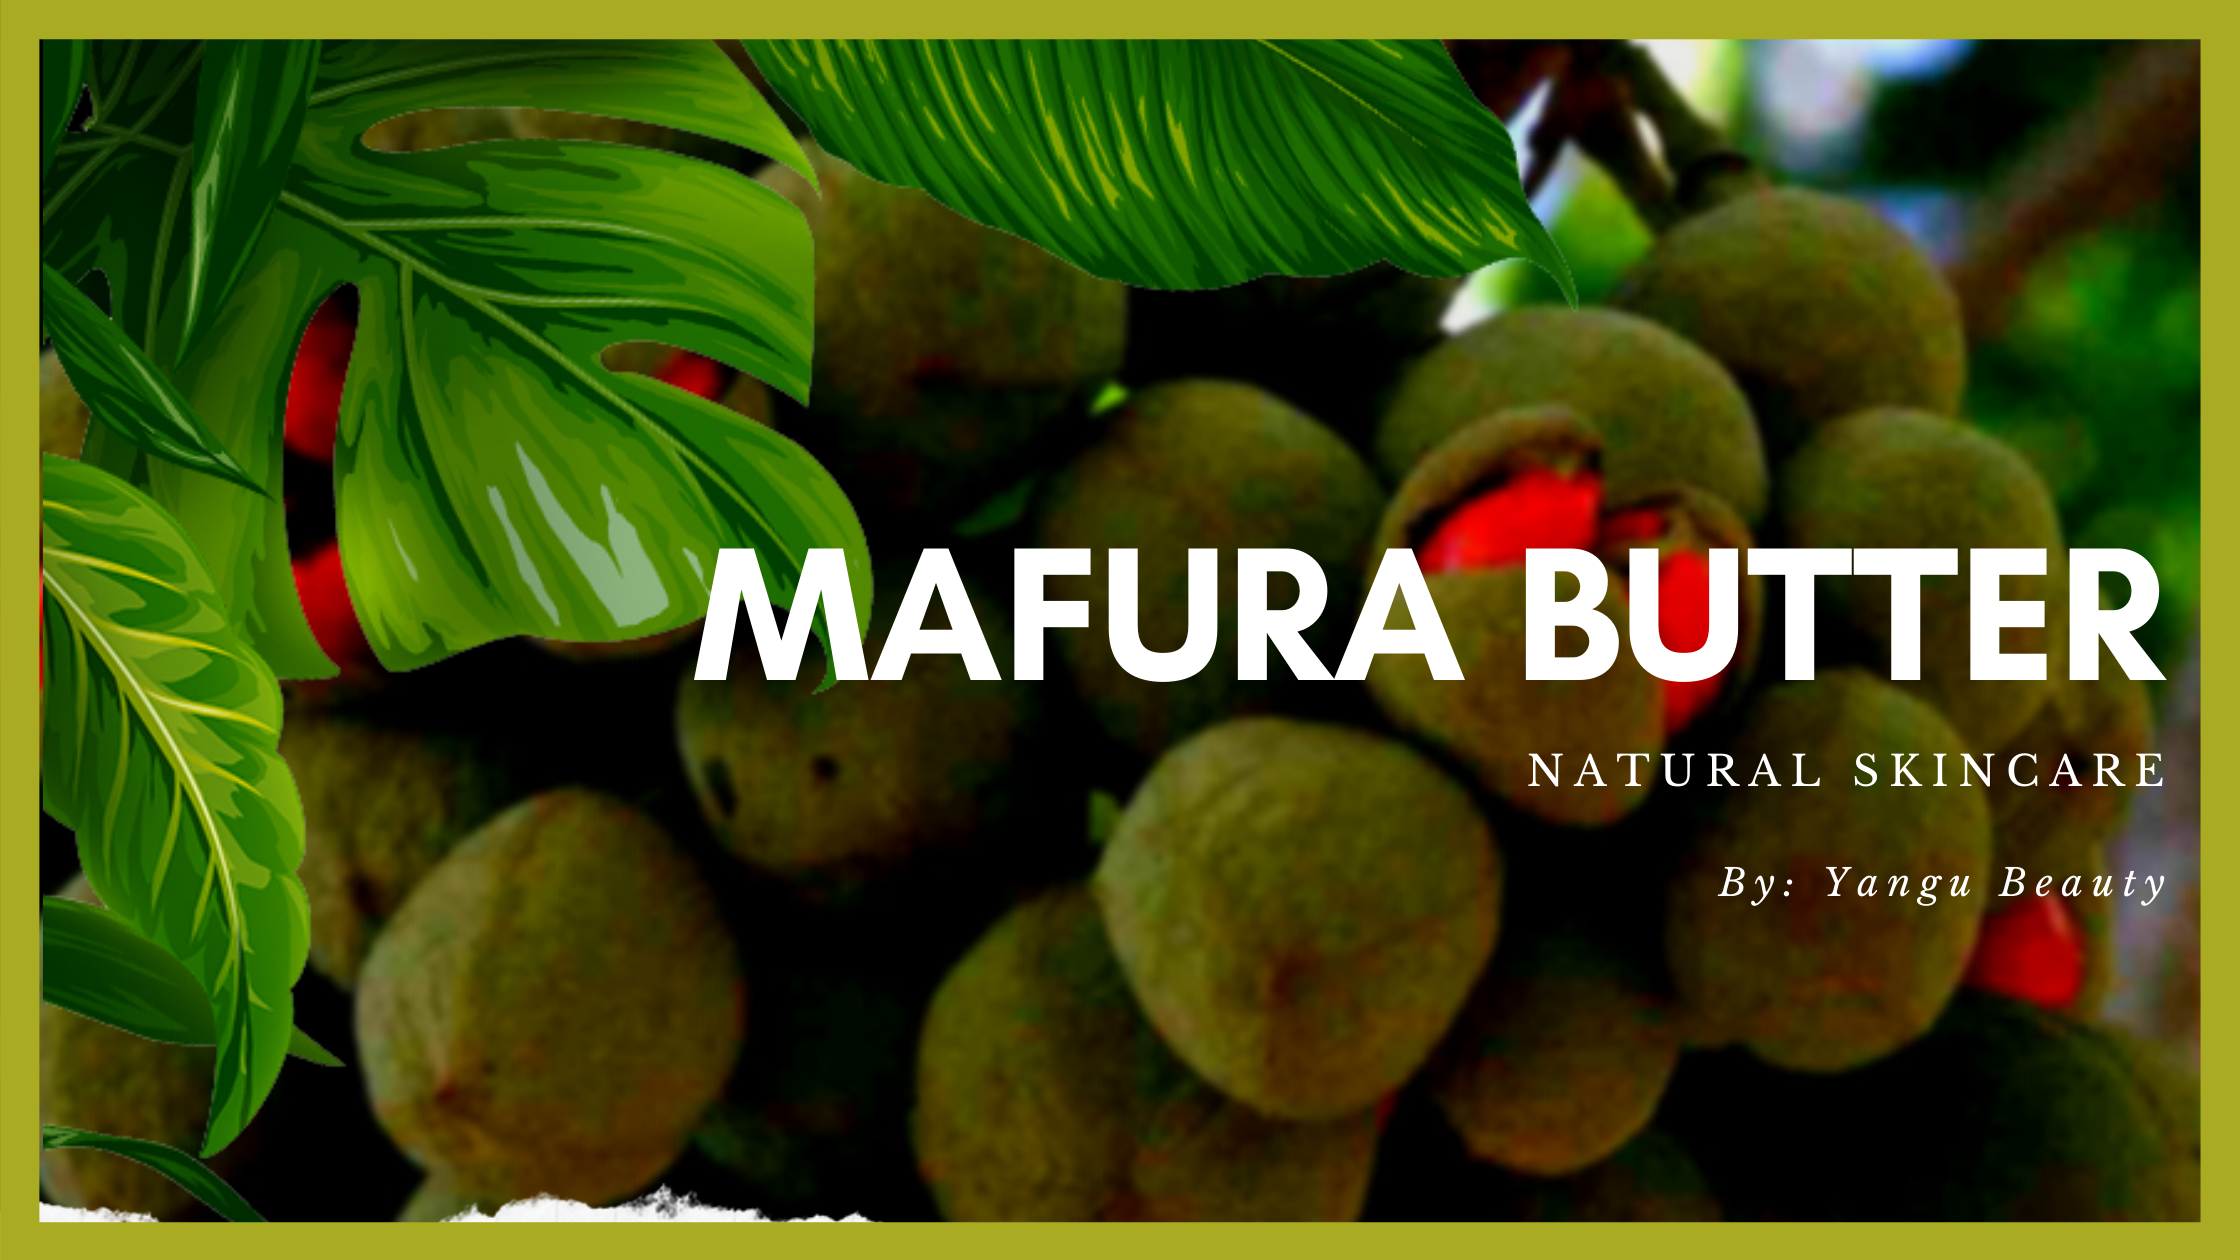 Mafura Butter - Yangu Beauty Natural Skincare